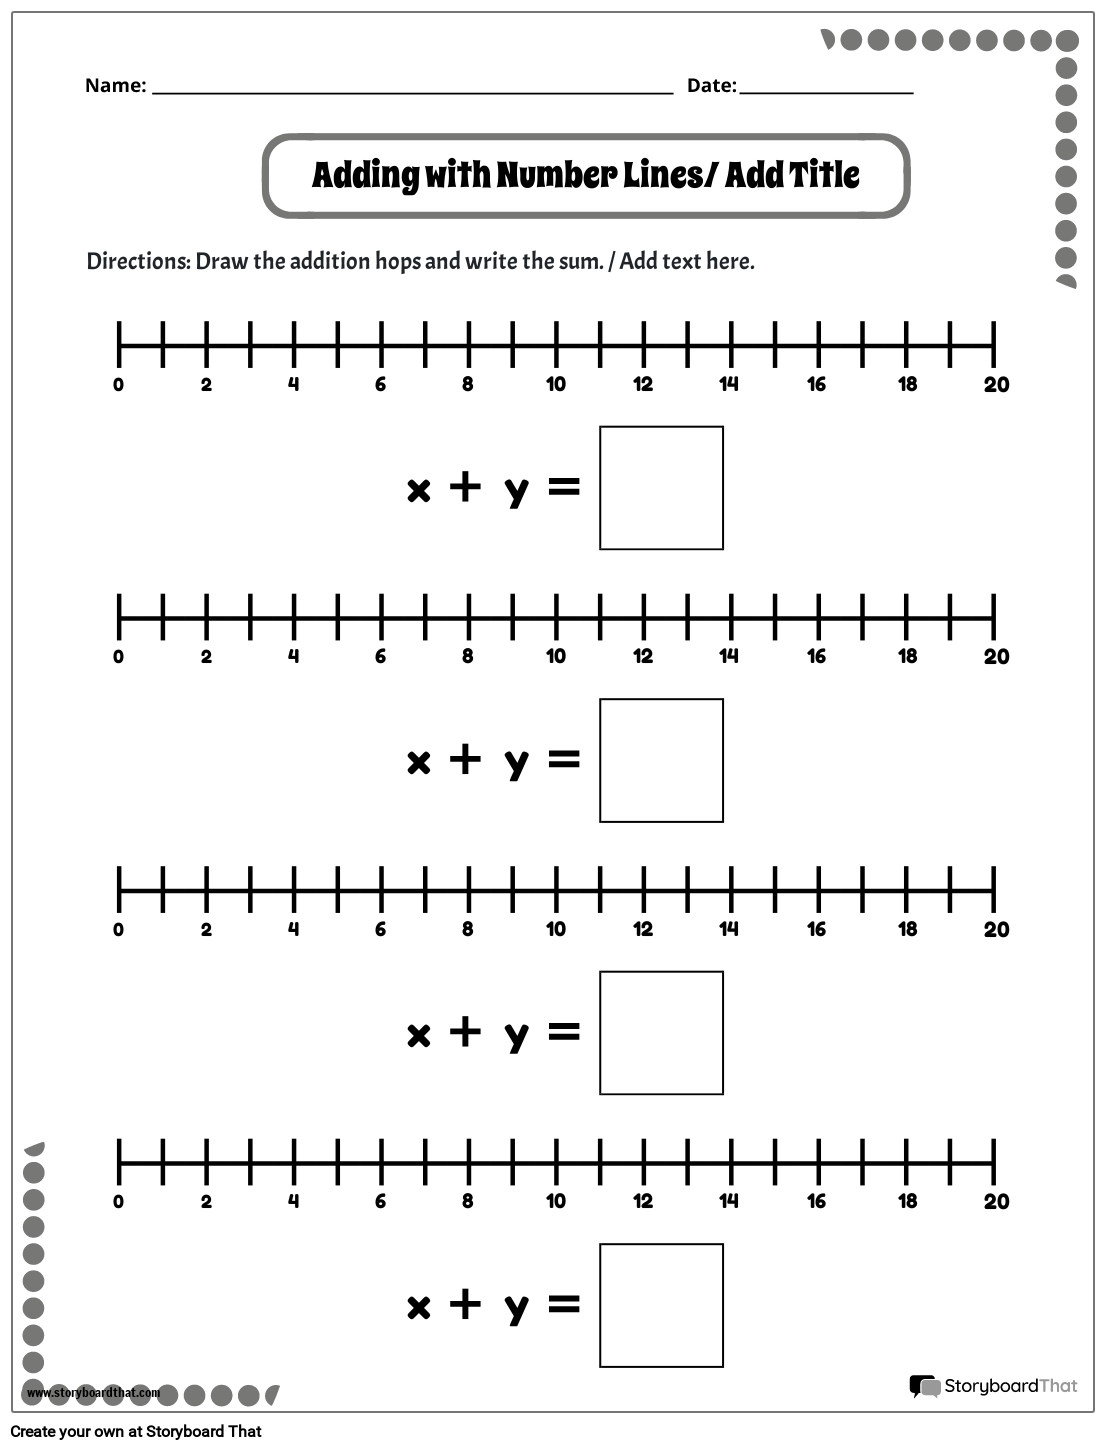 Number Line Addition Worksheet with Polka Dot Border - Black and White